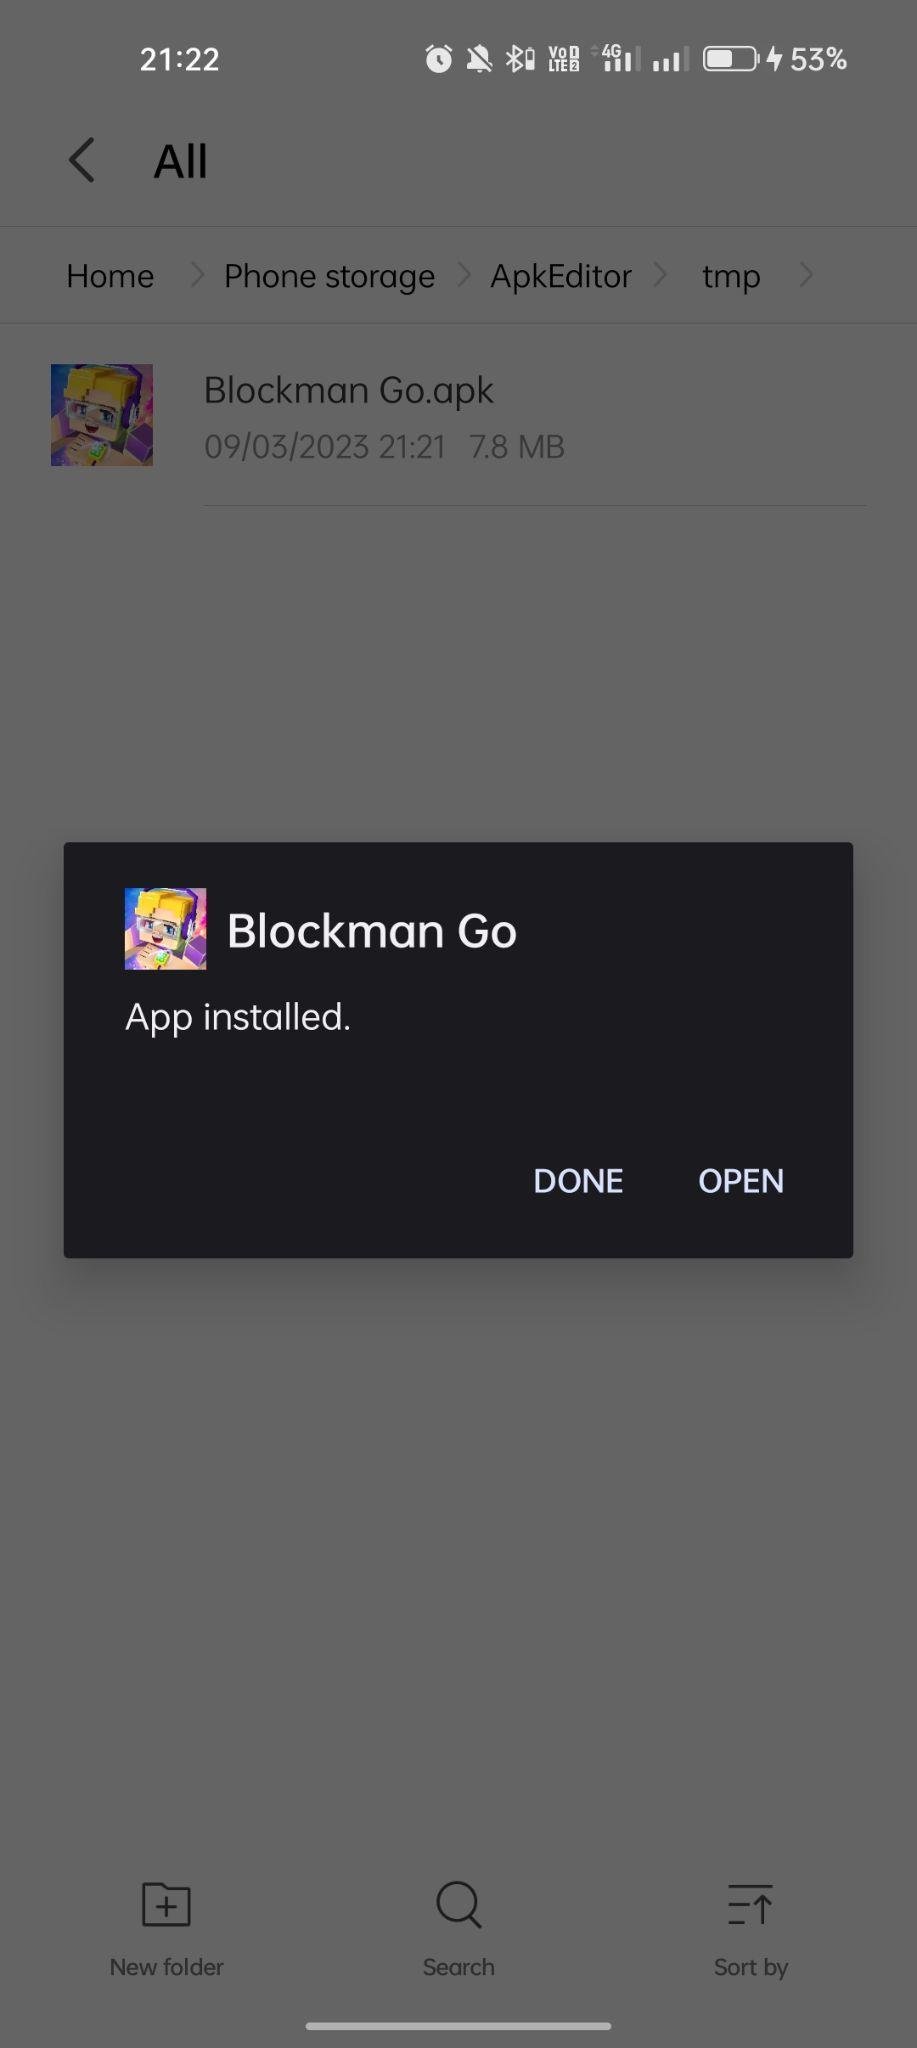 Blockman Go apk installed